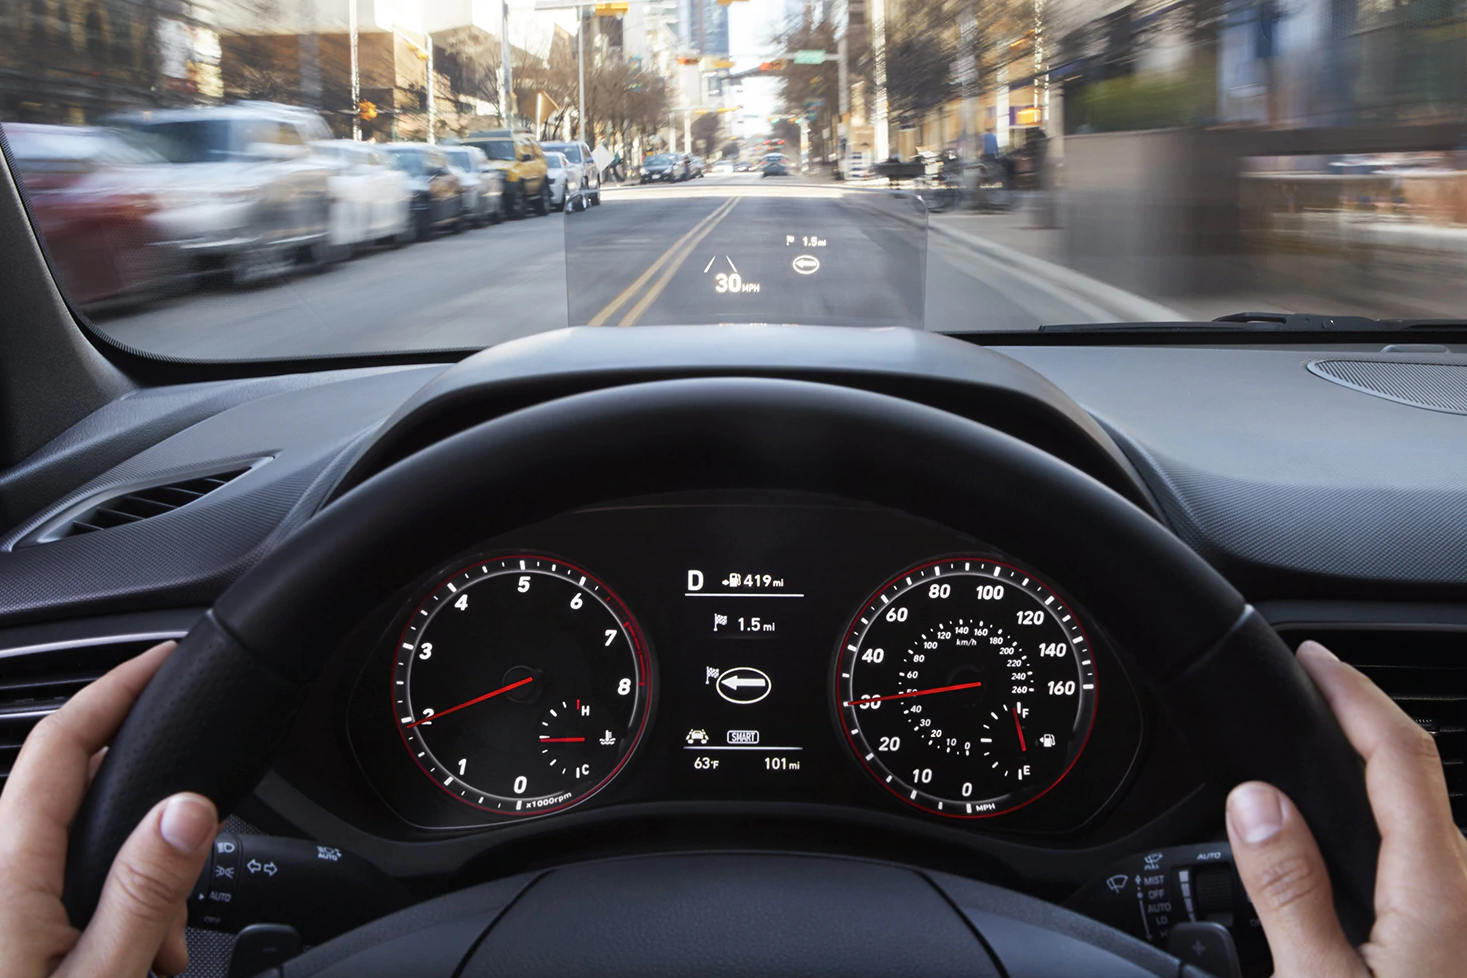 2020-Hyundai-Veloster-Turbo-head-up-display.jpg